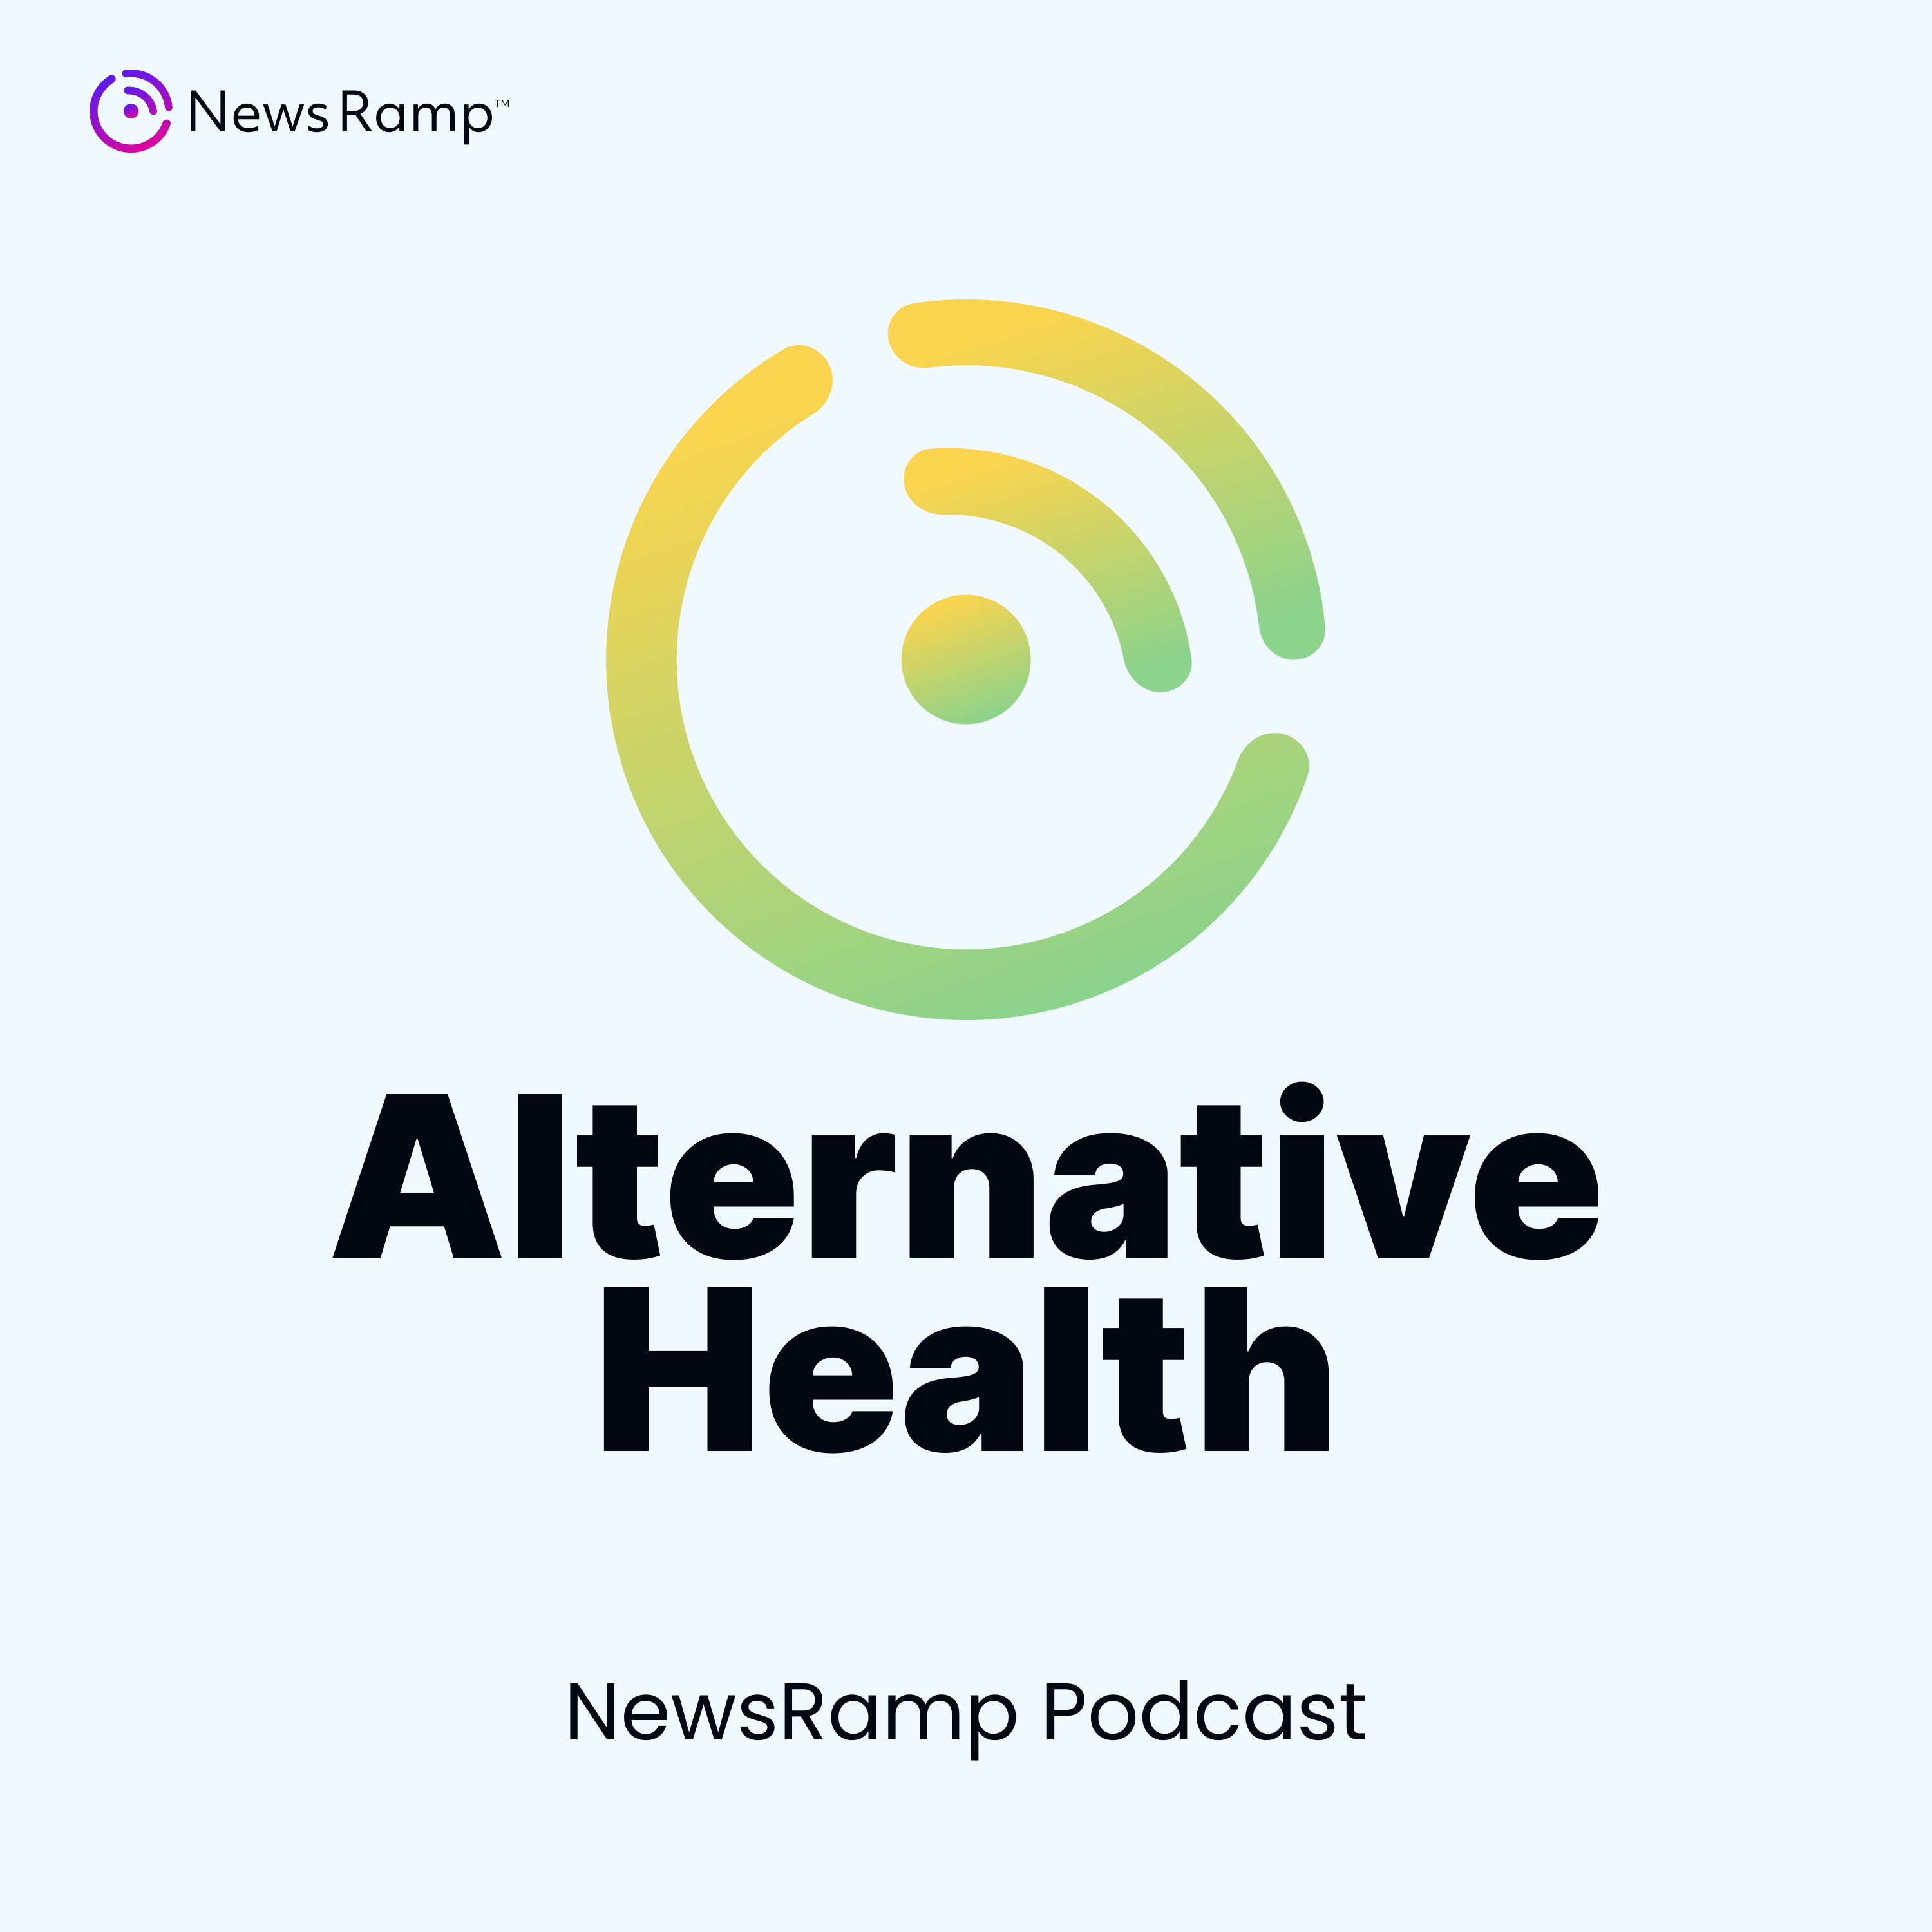 NewsRamp Alternative Health Podcast